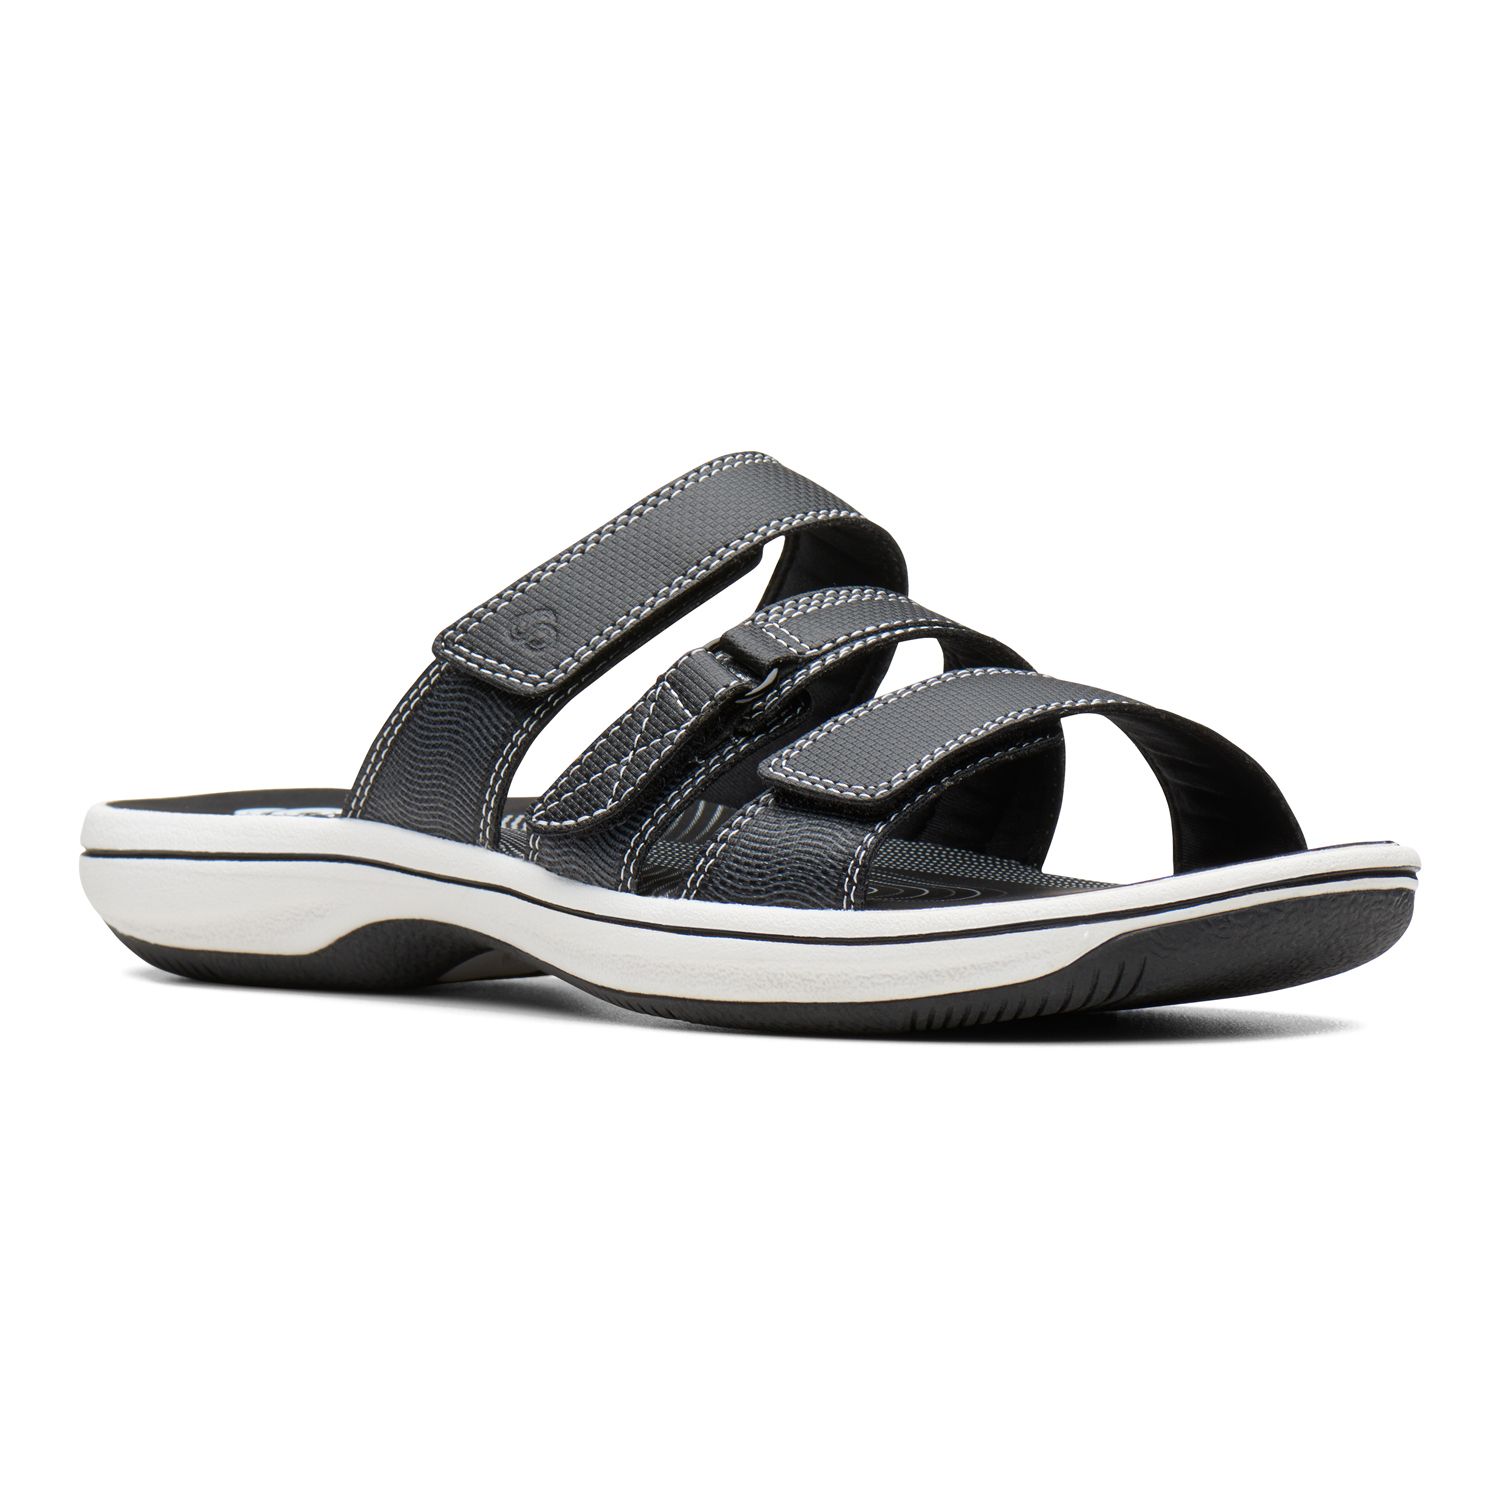 clarks women's slide sandals